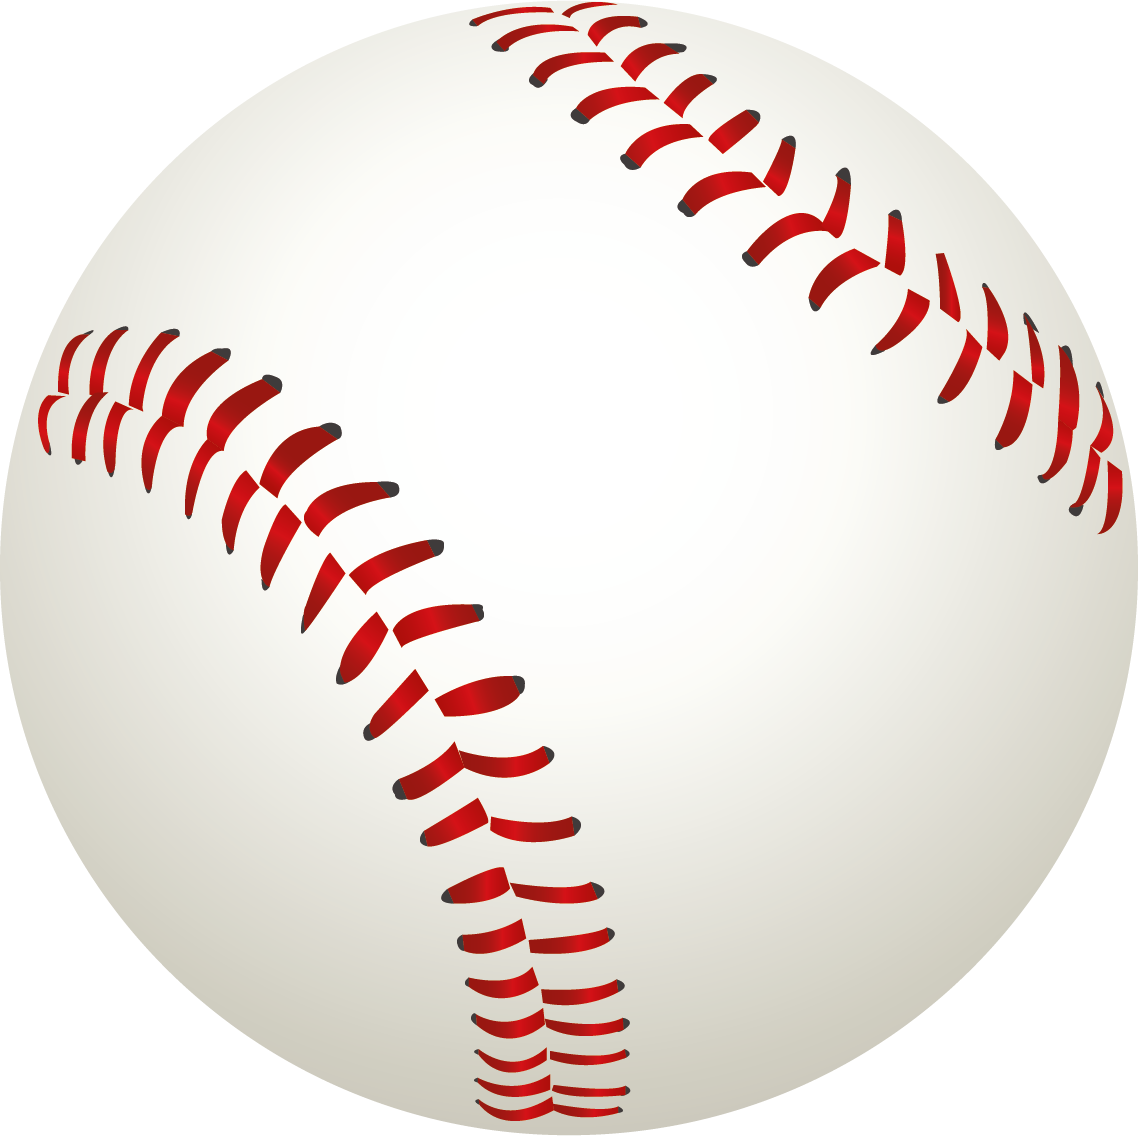 Baseball soft ball drawing free image download